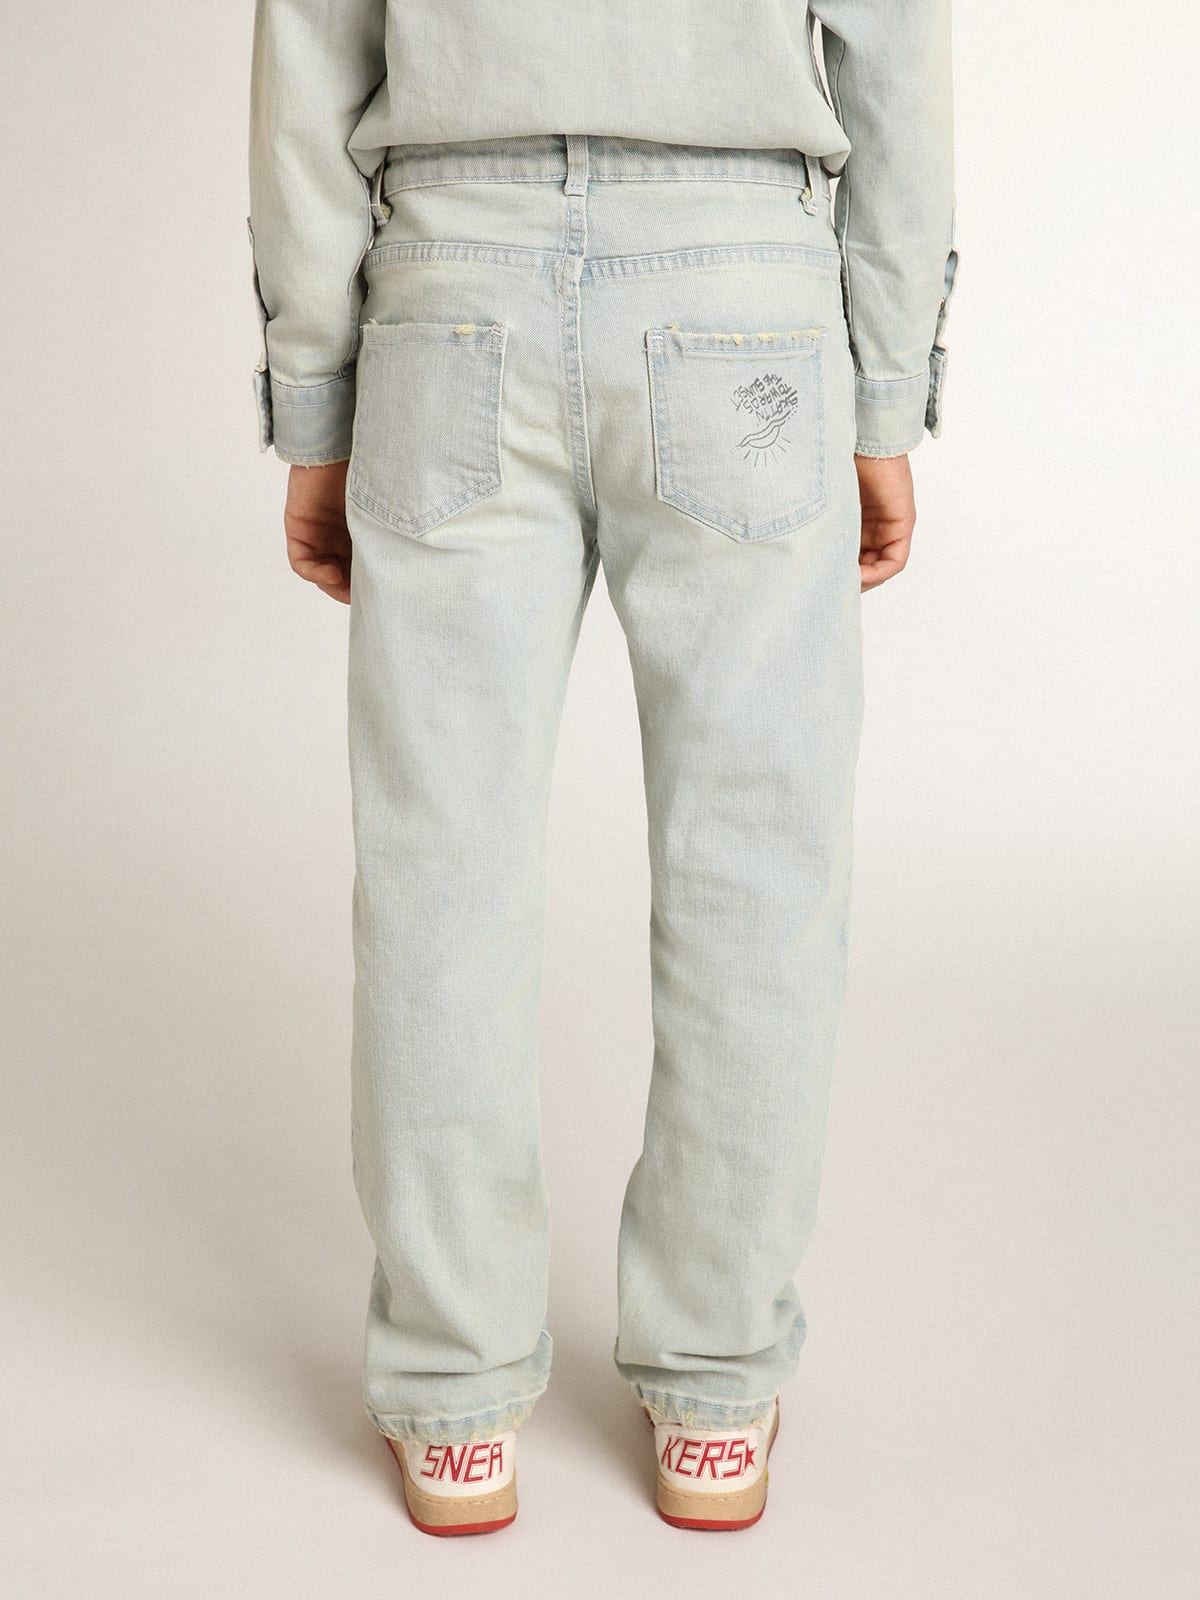 Golden Goose - Calça jeans desbotada infantil masculina com tratamento desgastado in 